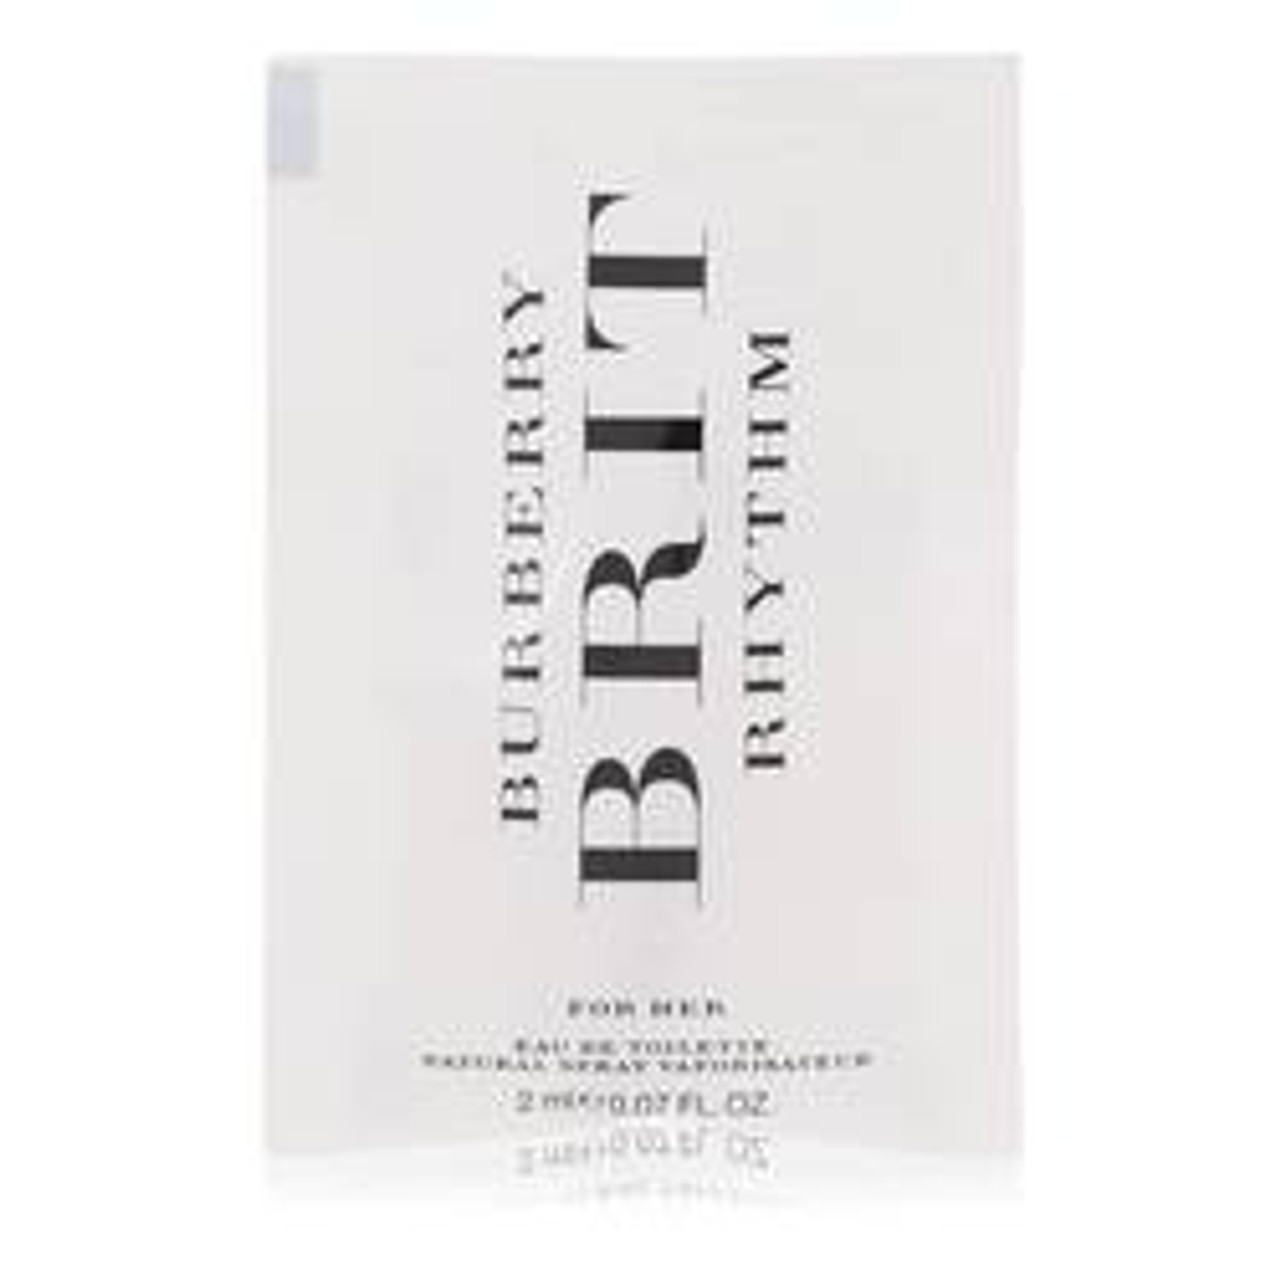 Burberry Brit Rhythm Perfume By Burberry Vial (sample) 0.06 oz for Women - *Pre-Order